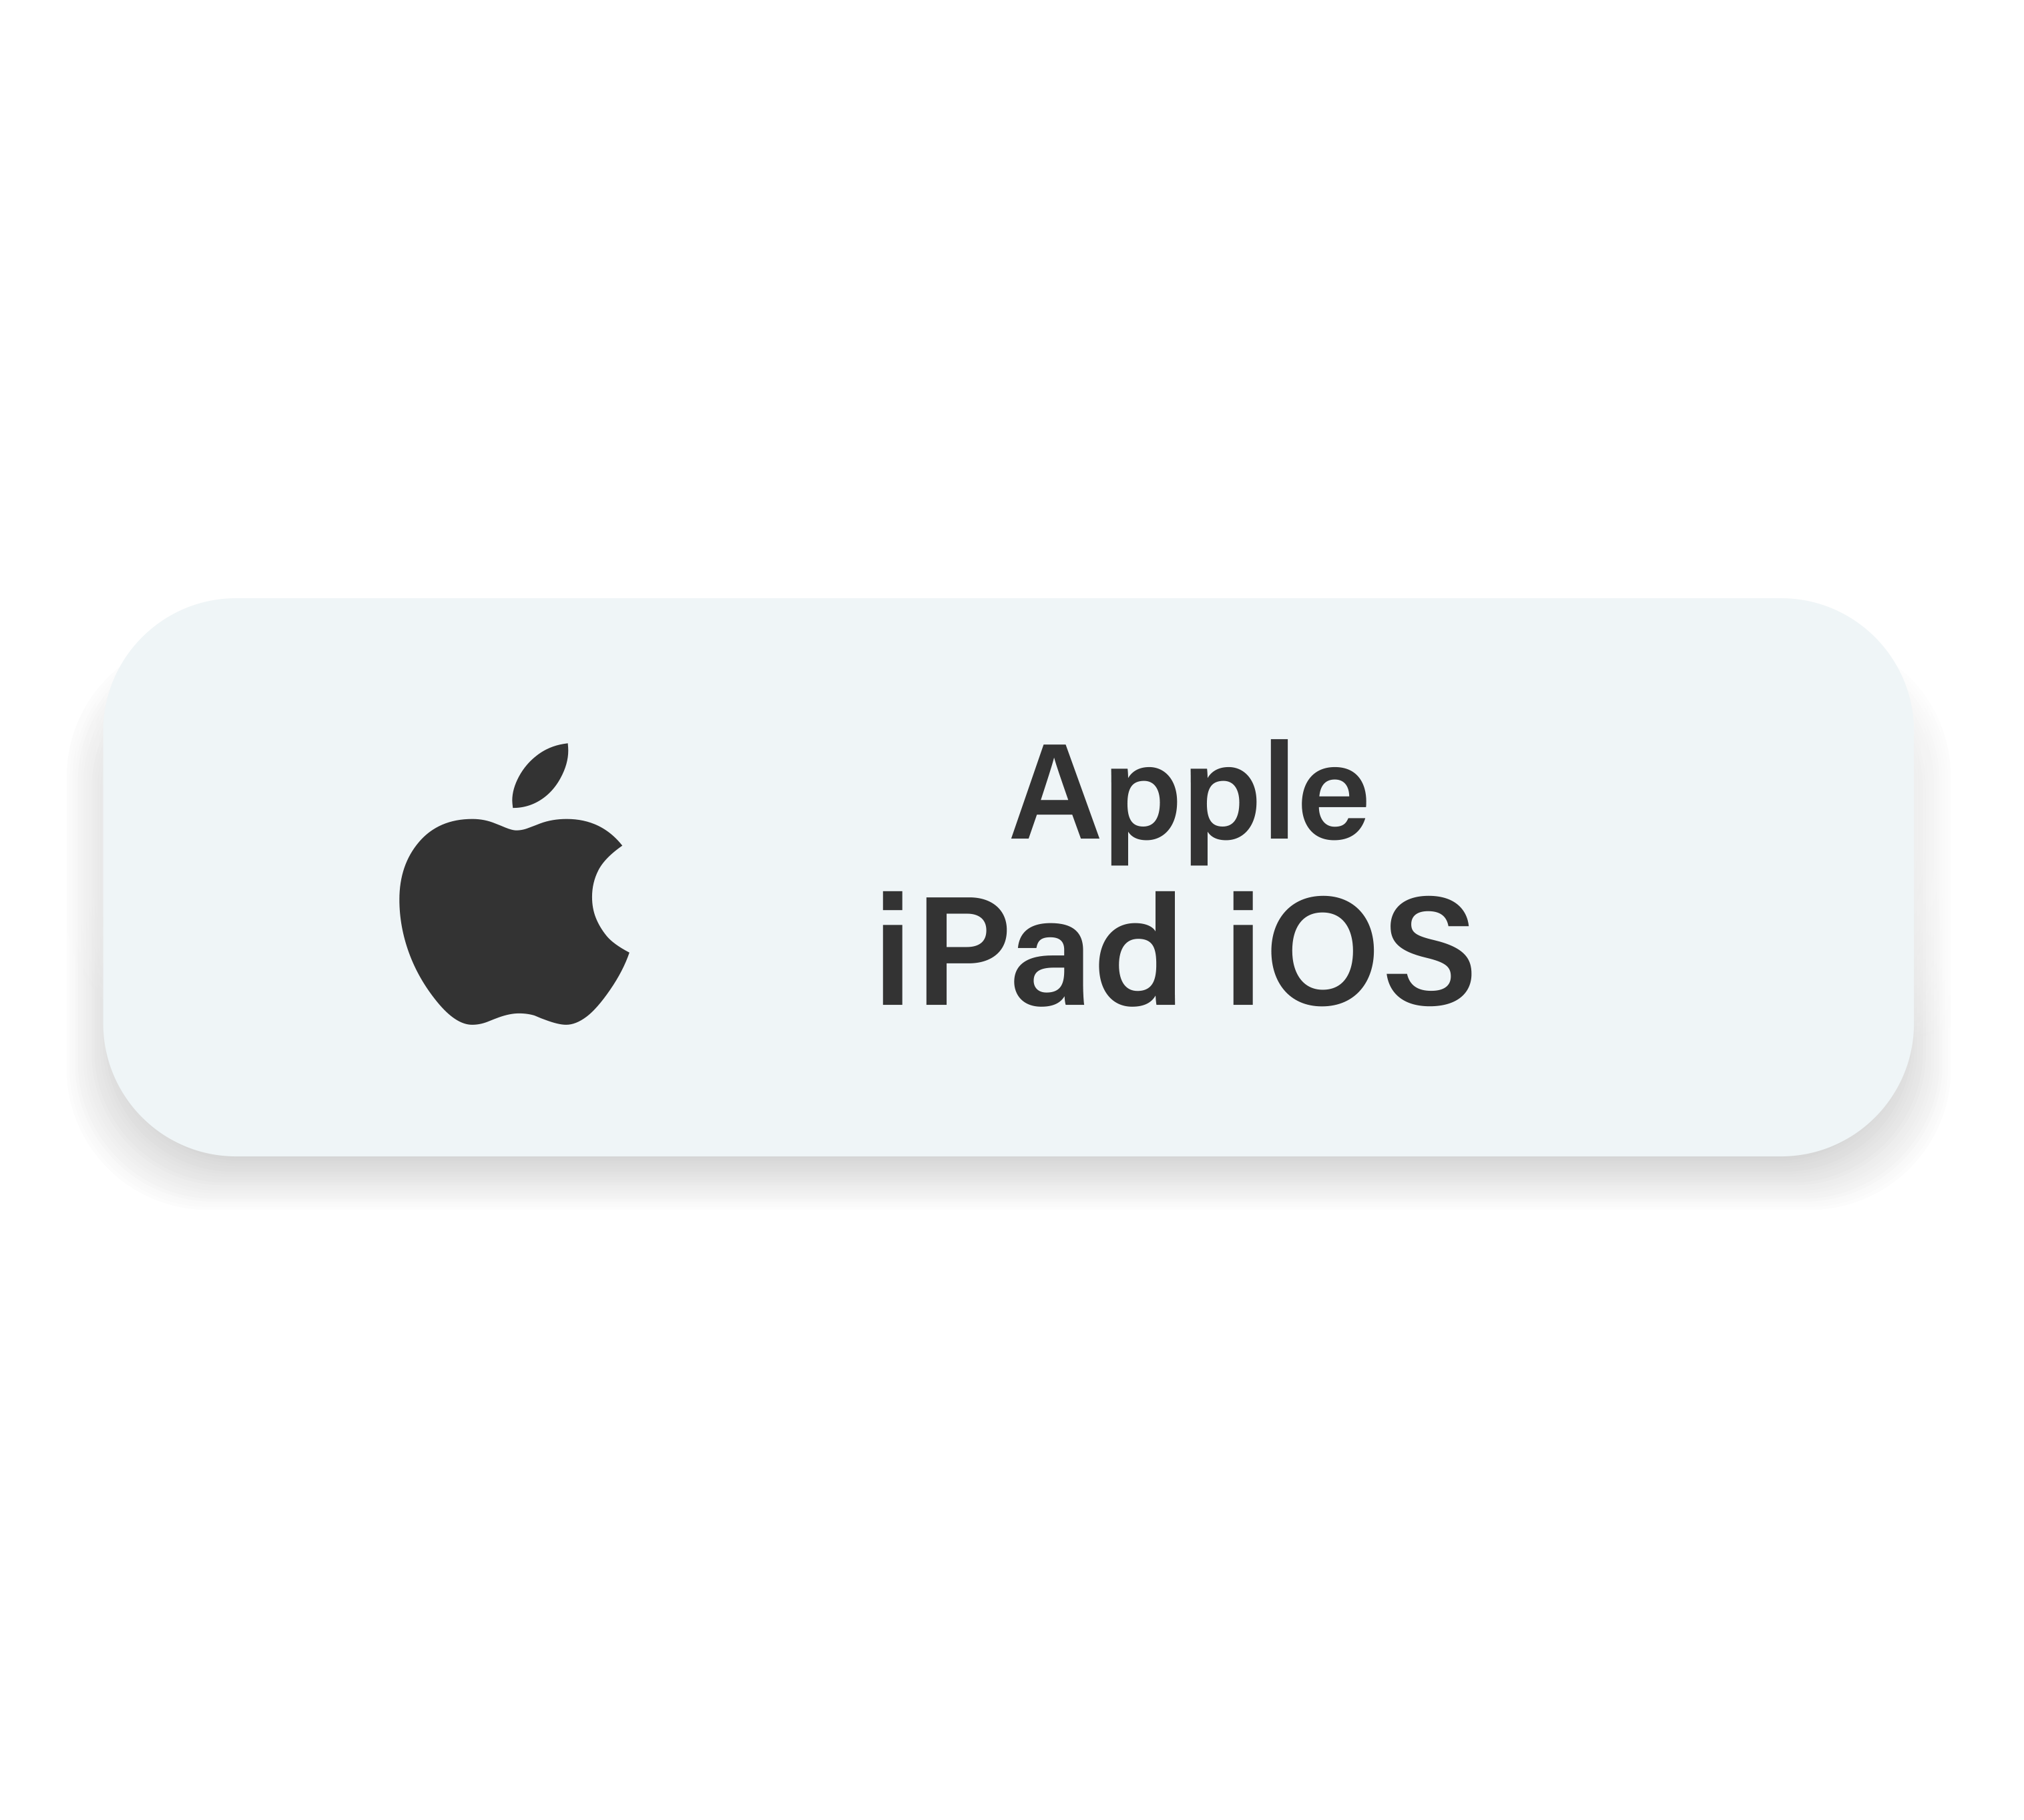 iPad da Apple, iPad iOS, Planner Digital, Caderno Digital, Stickers Adesivo Digital exclusivo para iPad Apple iOS 